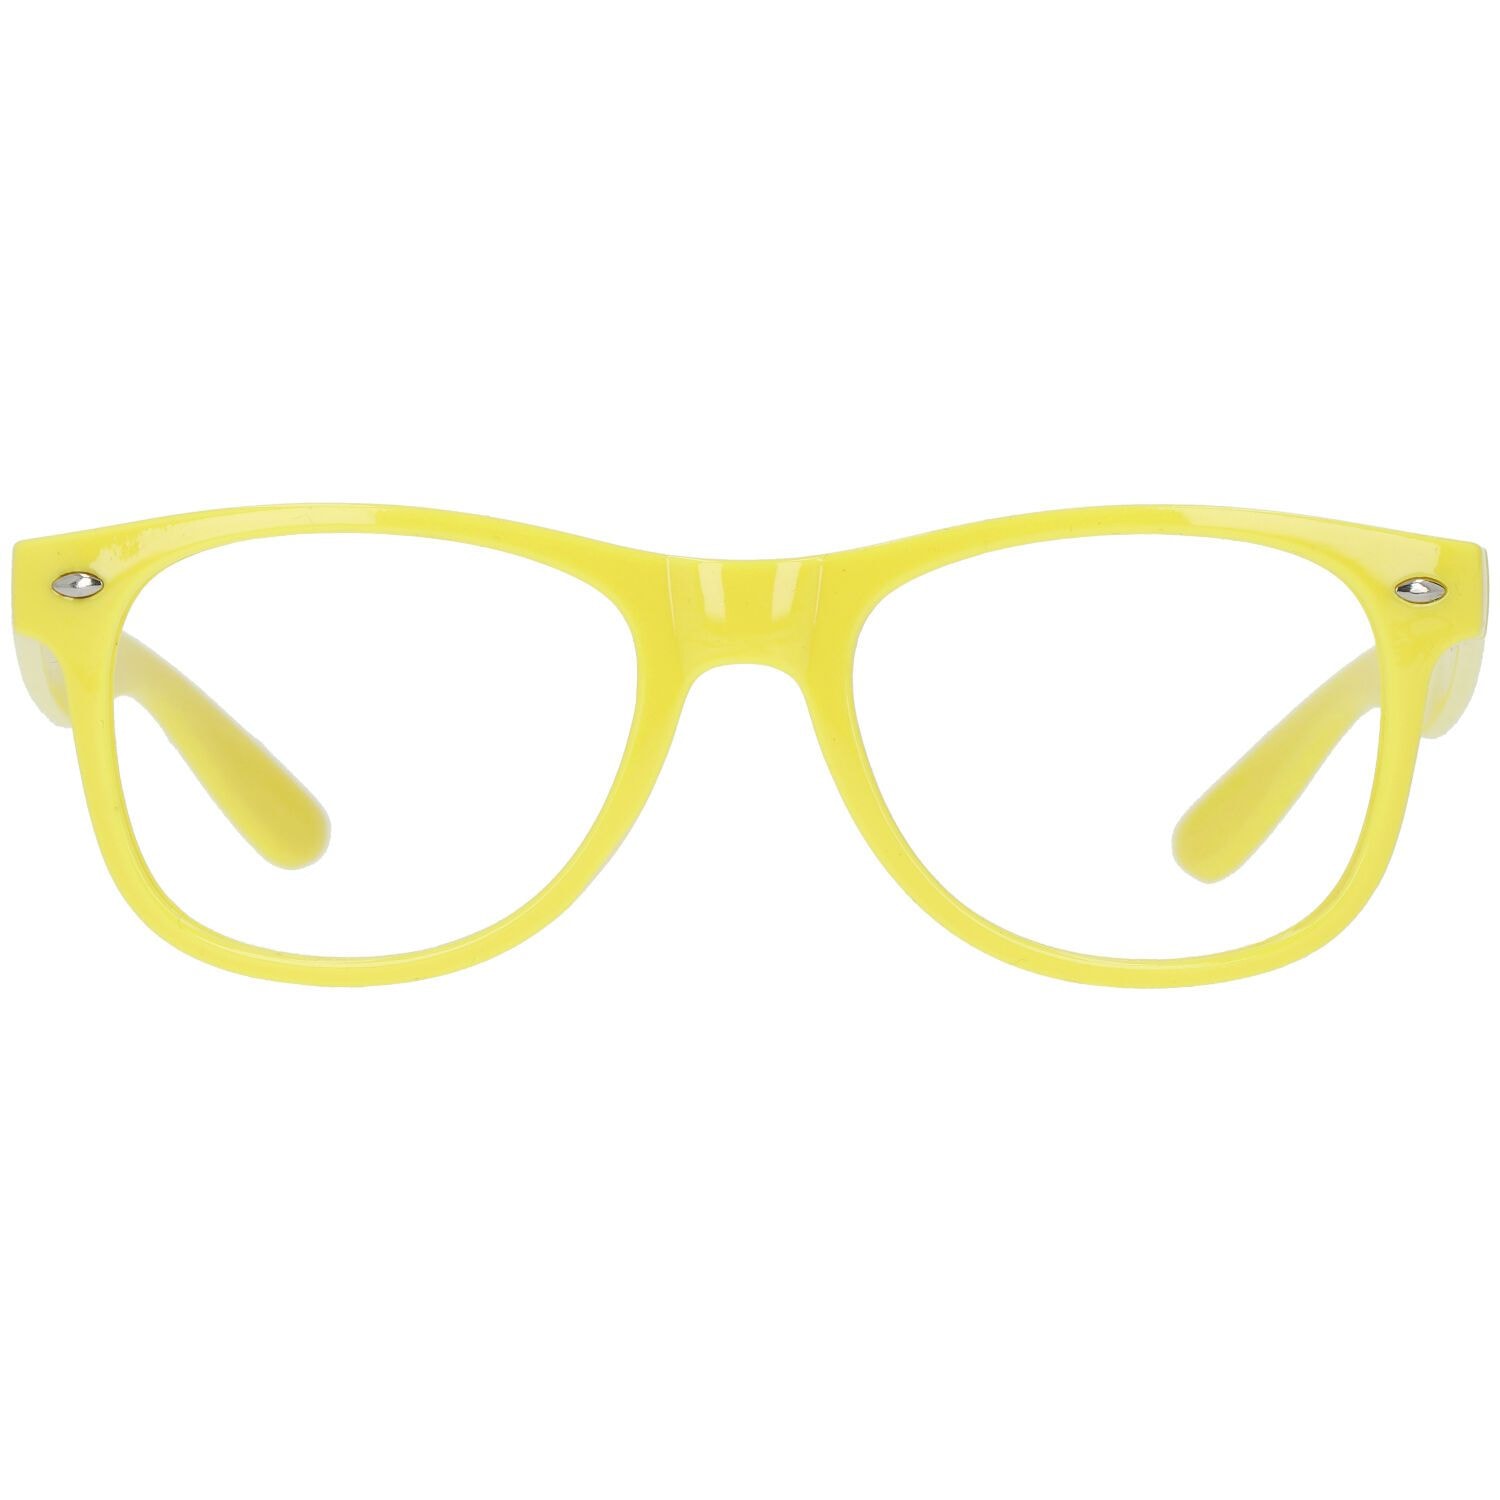 Standaard neon gele bril